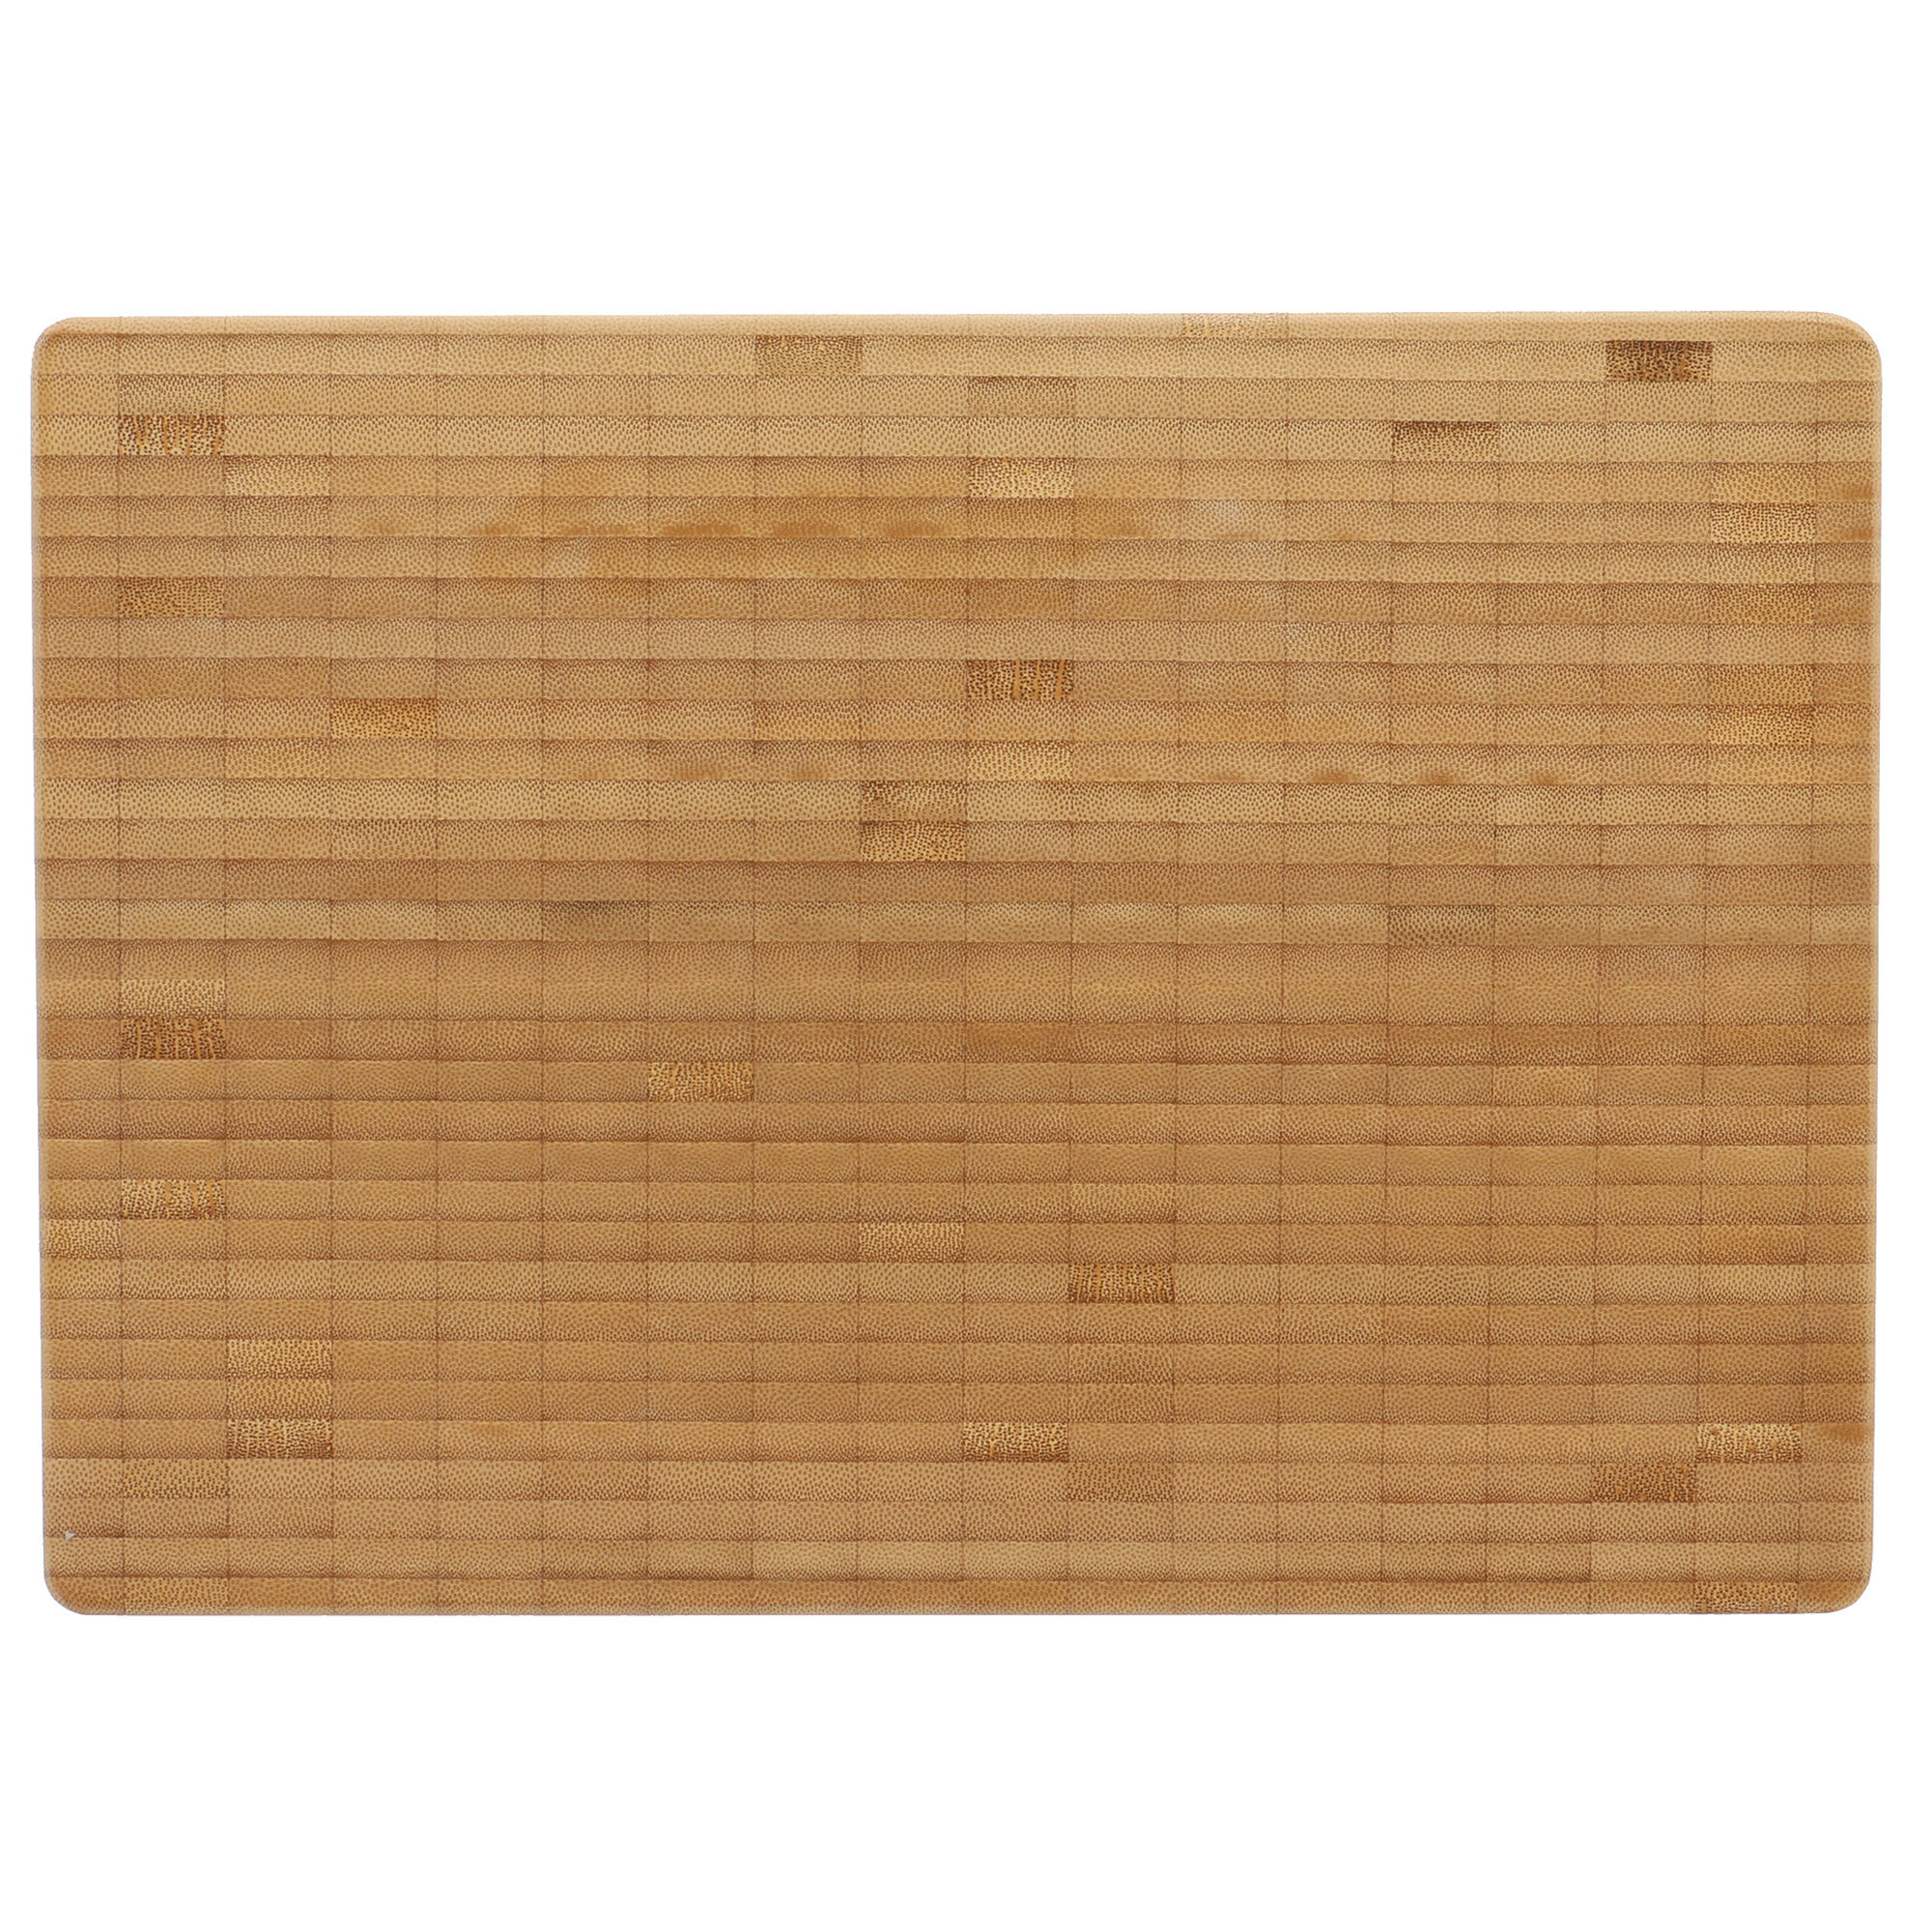 Zwilling Bamboo Cutting Board